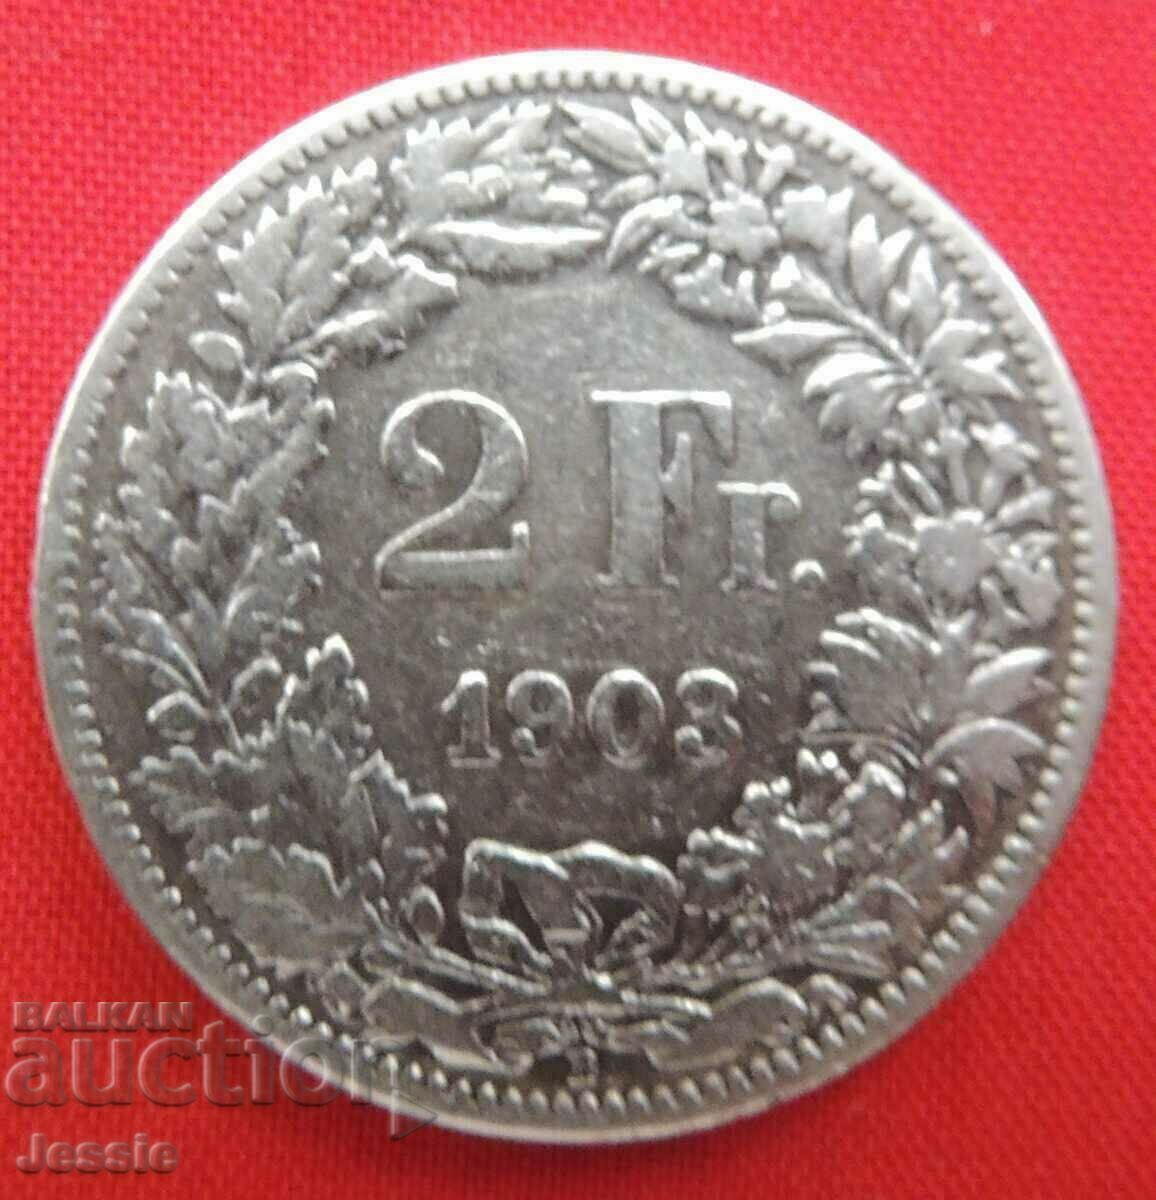 2 Francs 1903 B Switzerland Silver